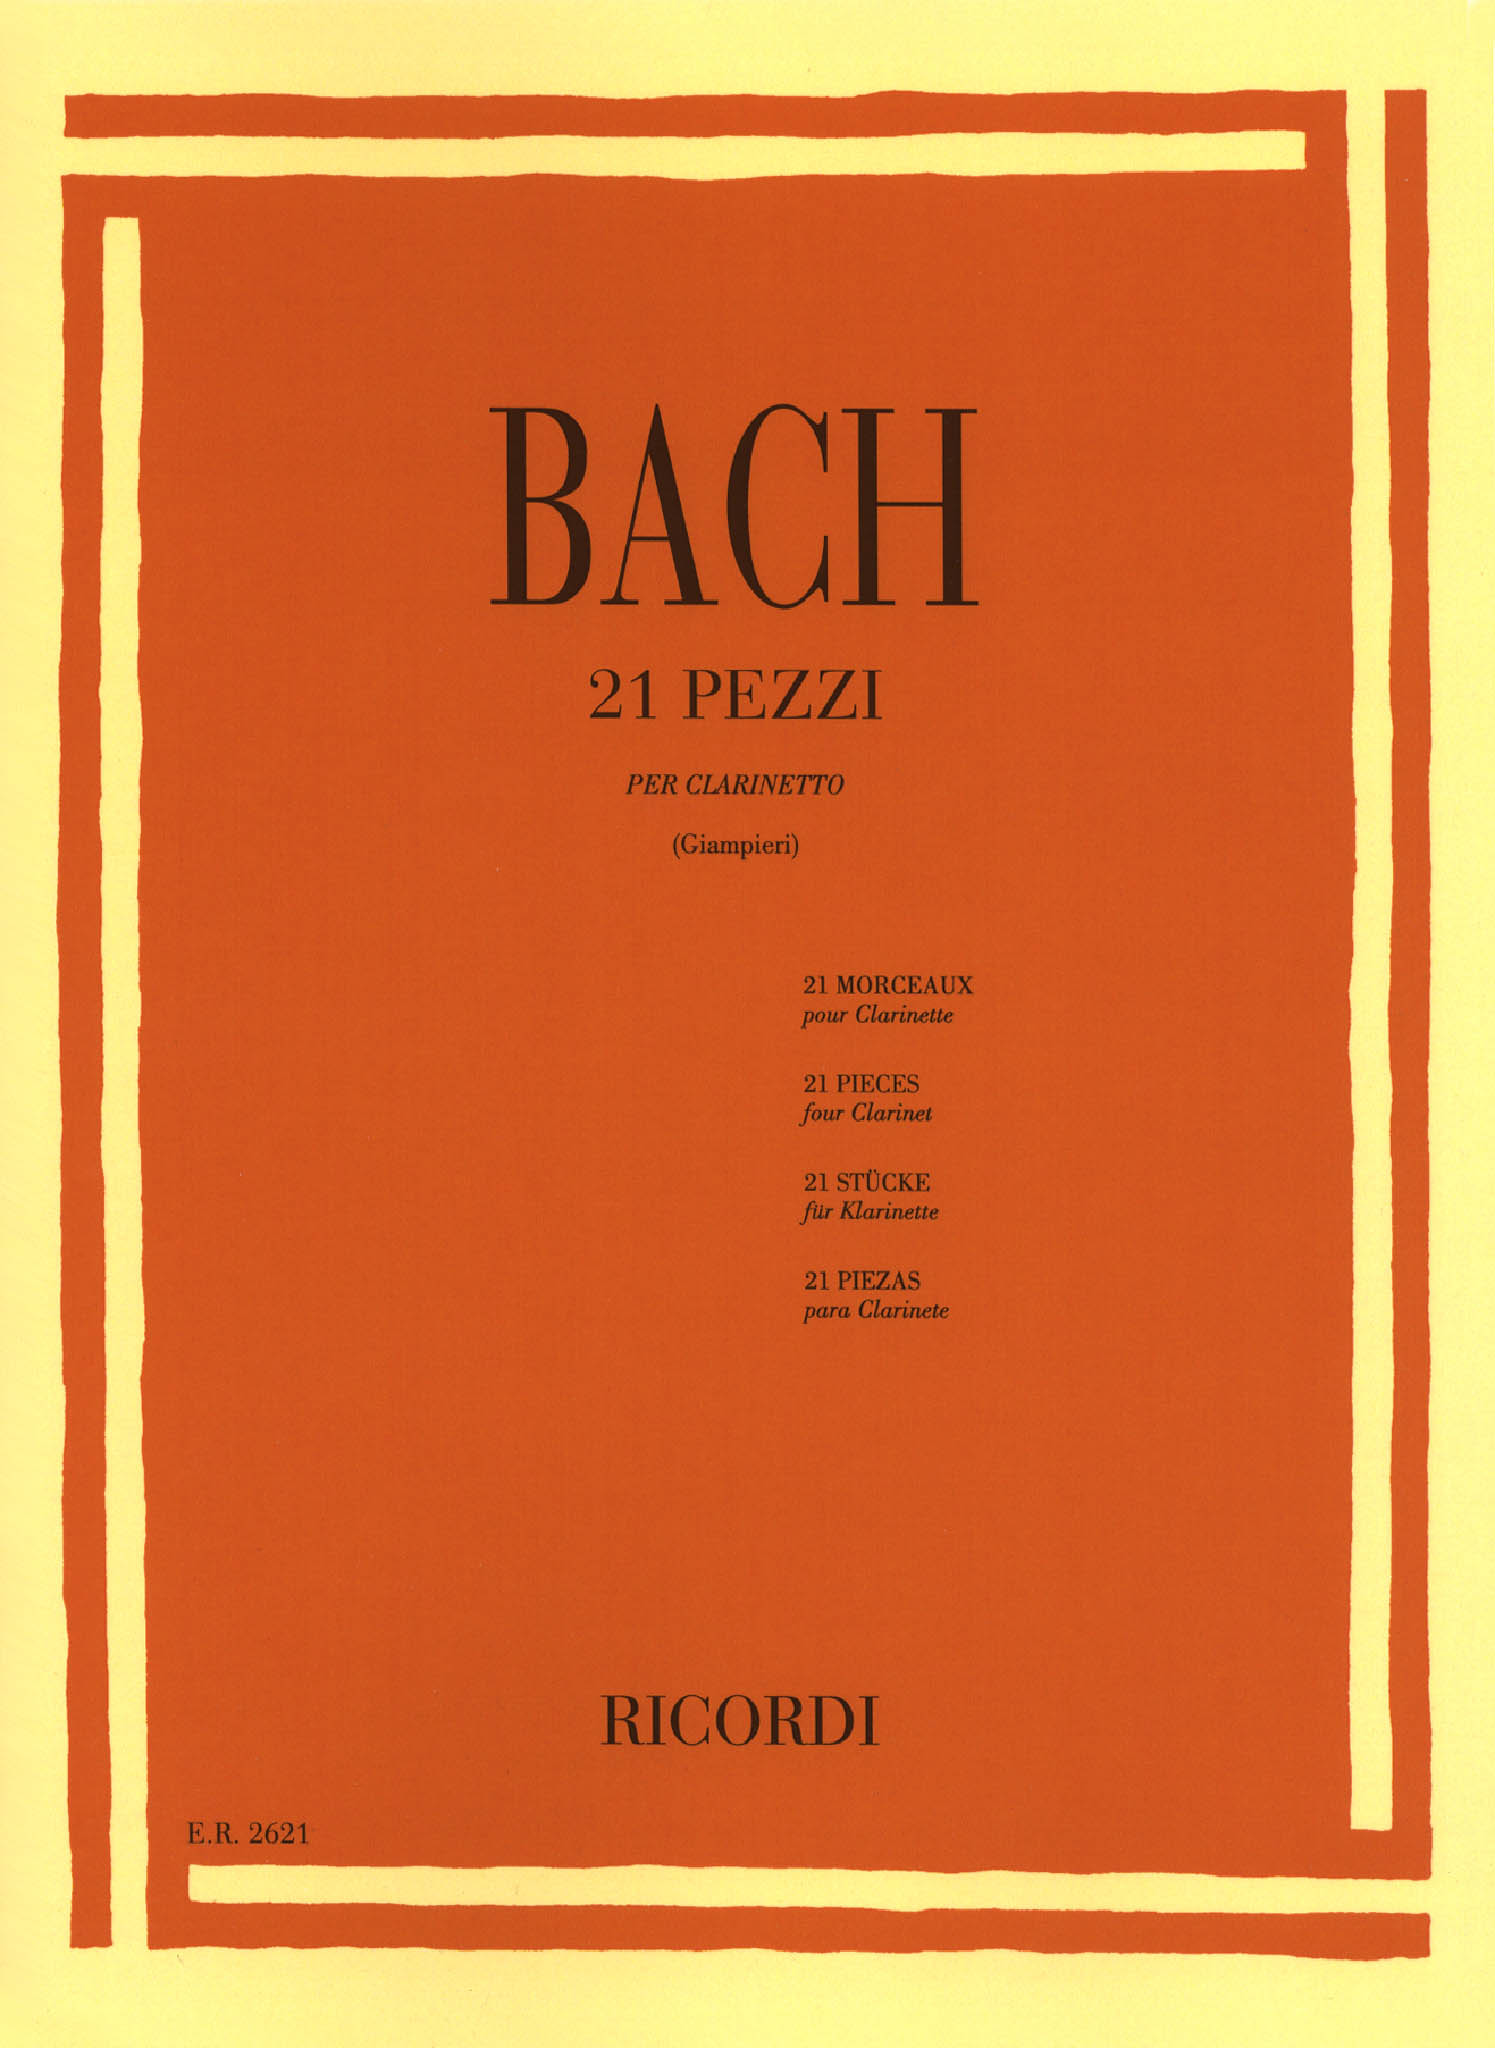 Bach 21 Pezzi arranged by Giampieri for clarinet unaccompanied cover